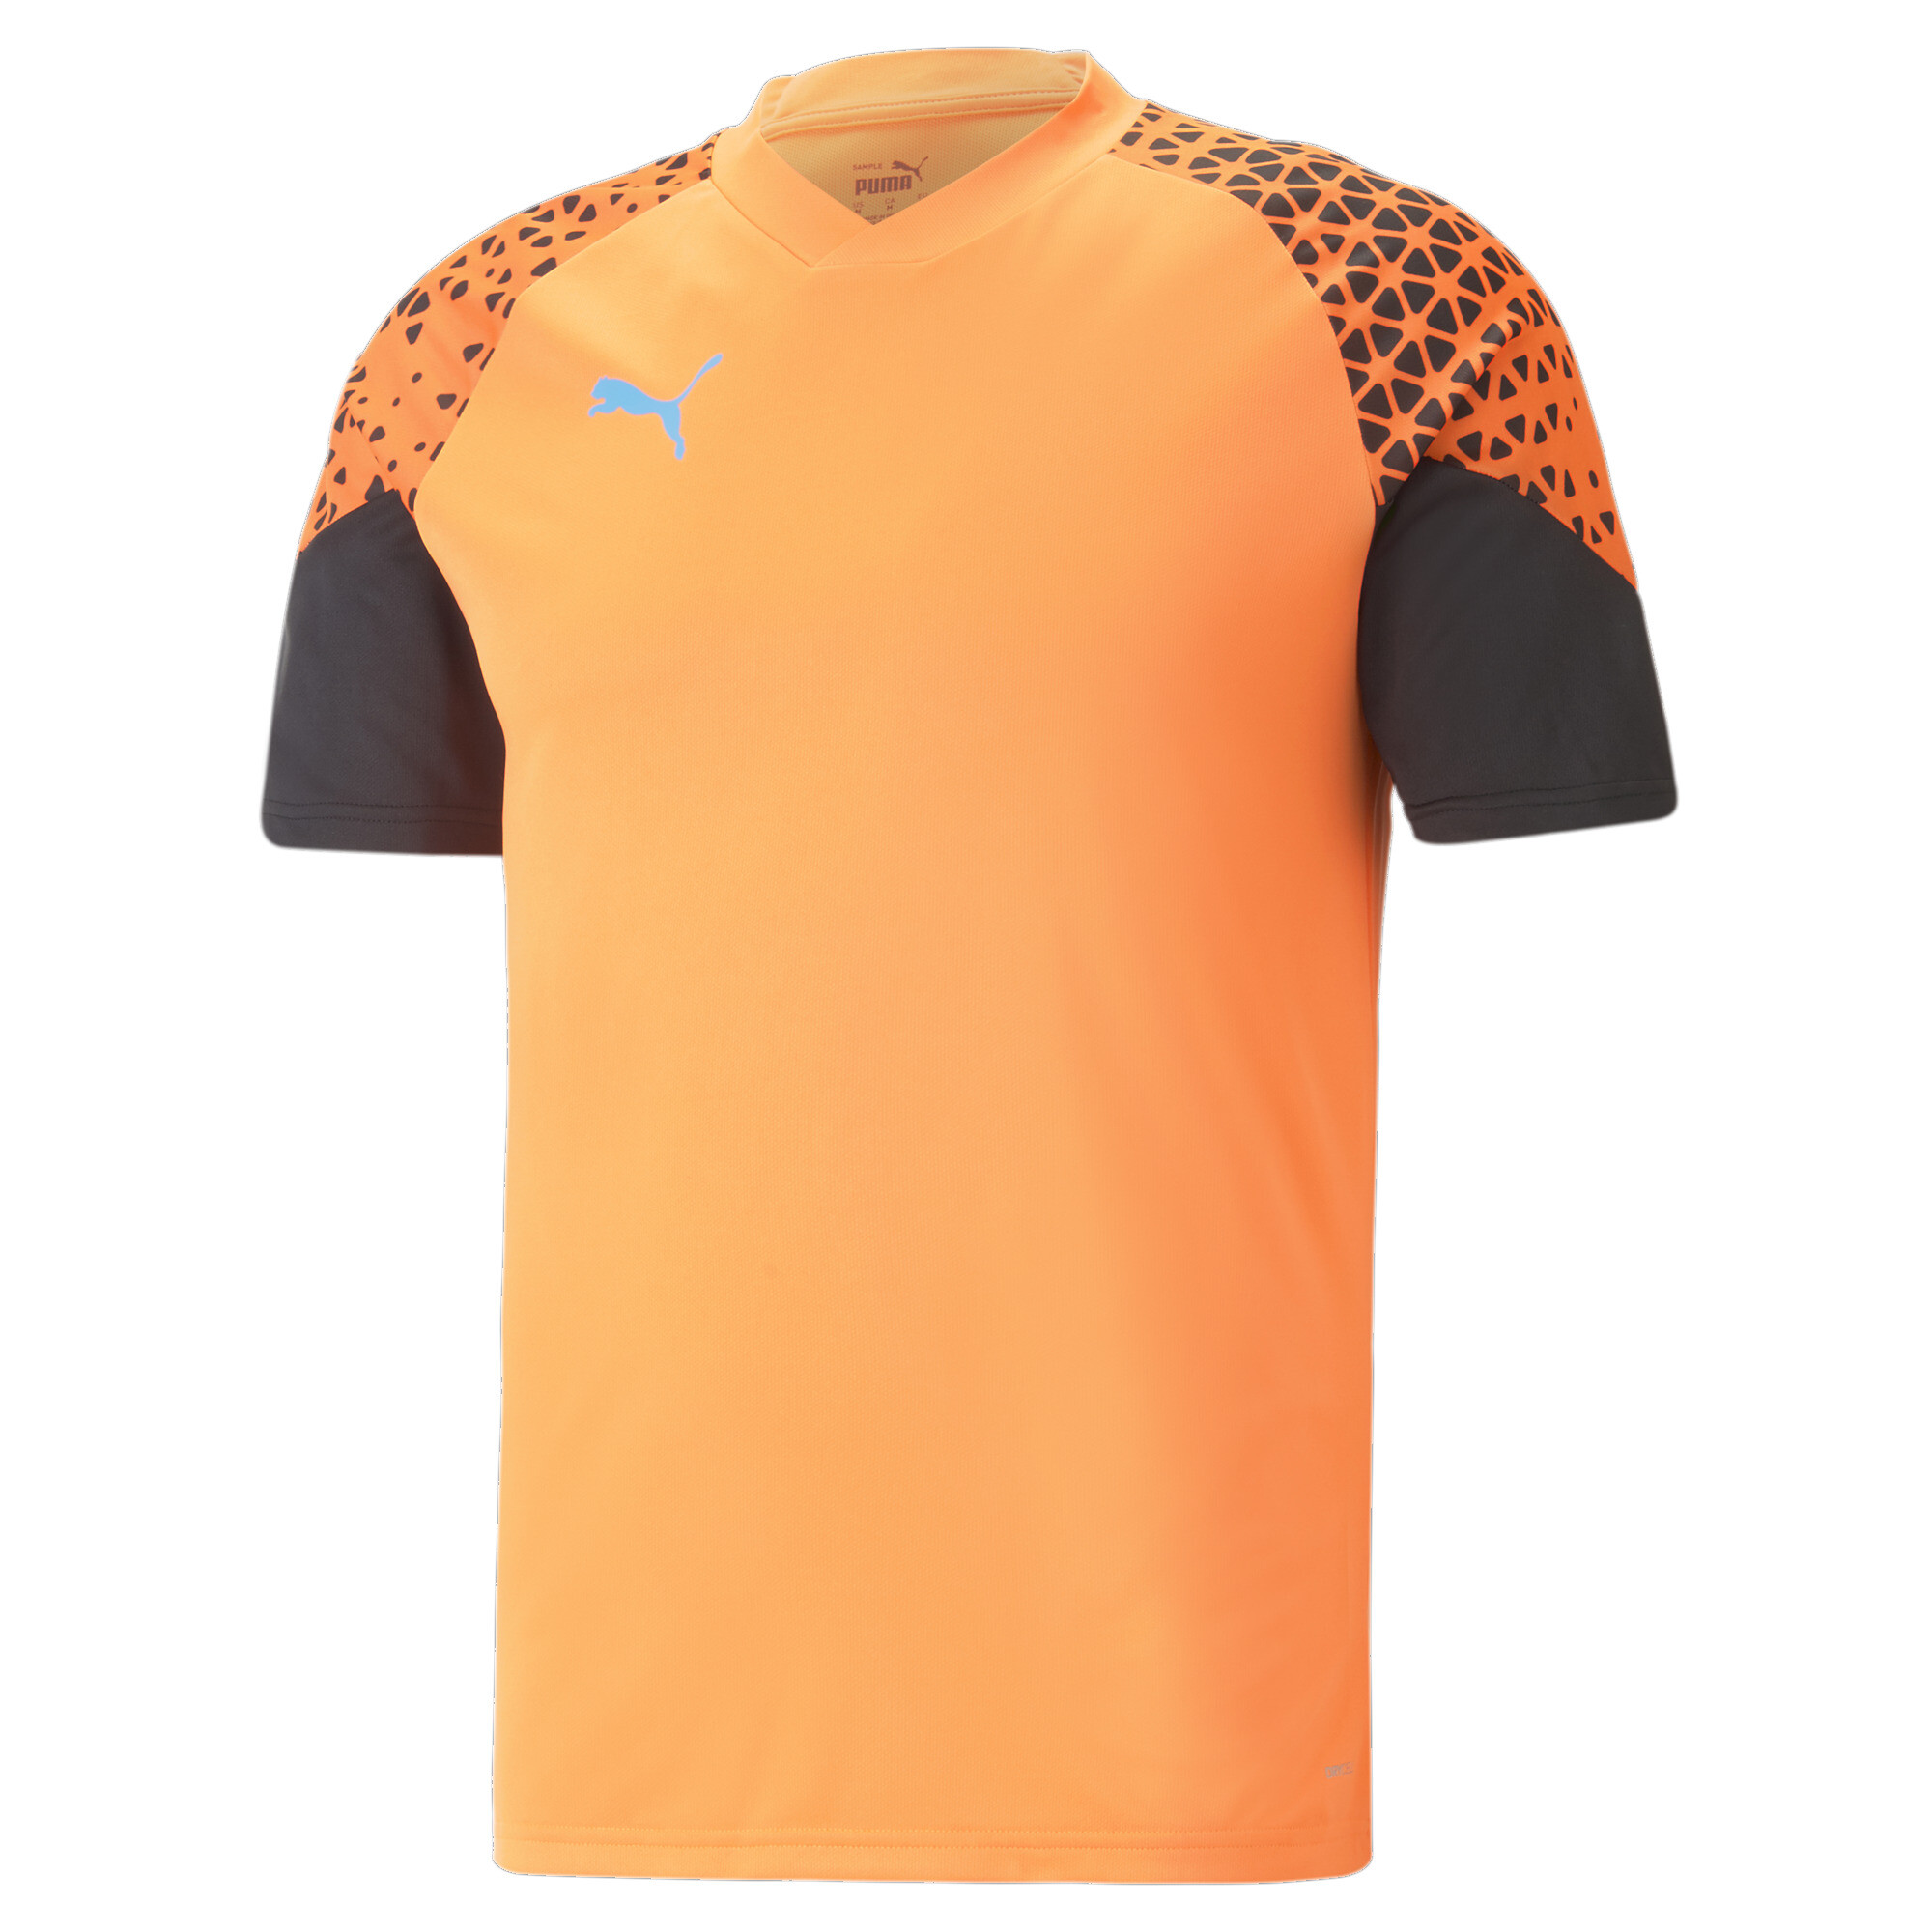 Men's Puma Individual CUP Football Jersey, Orange, Size M, Clothing